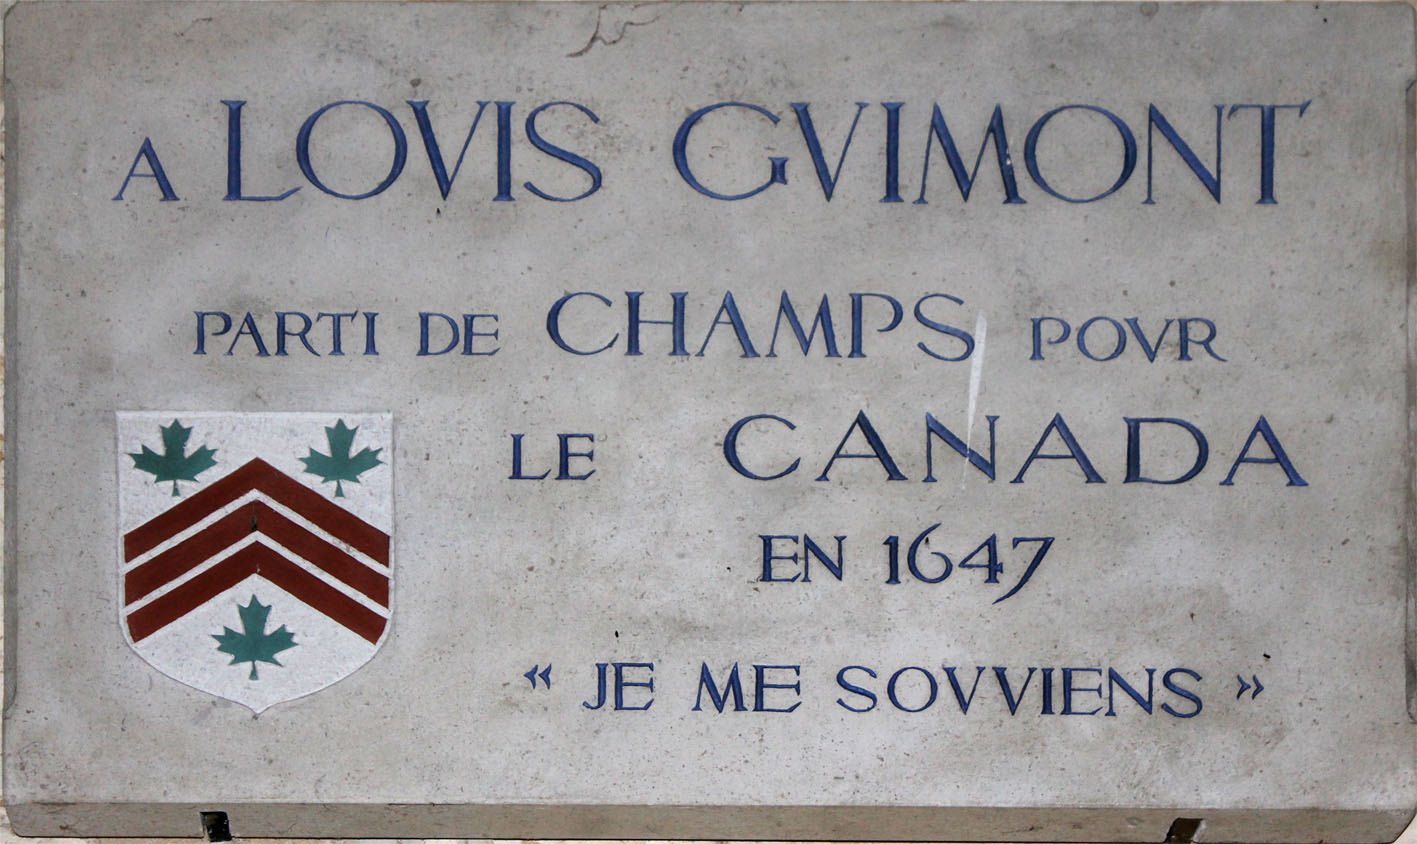 Commemorative plaque in Champs